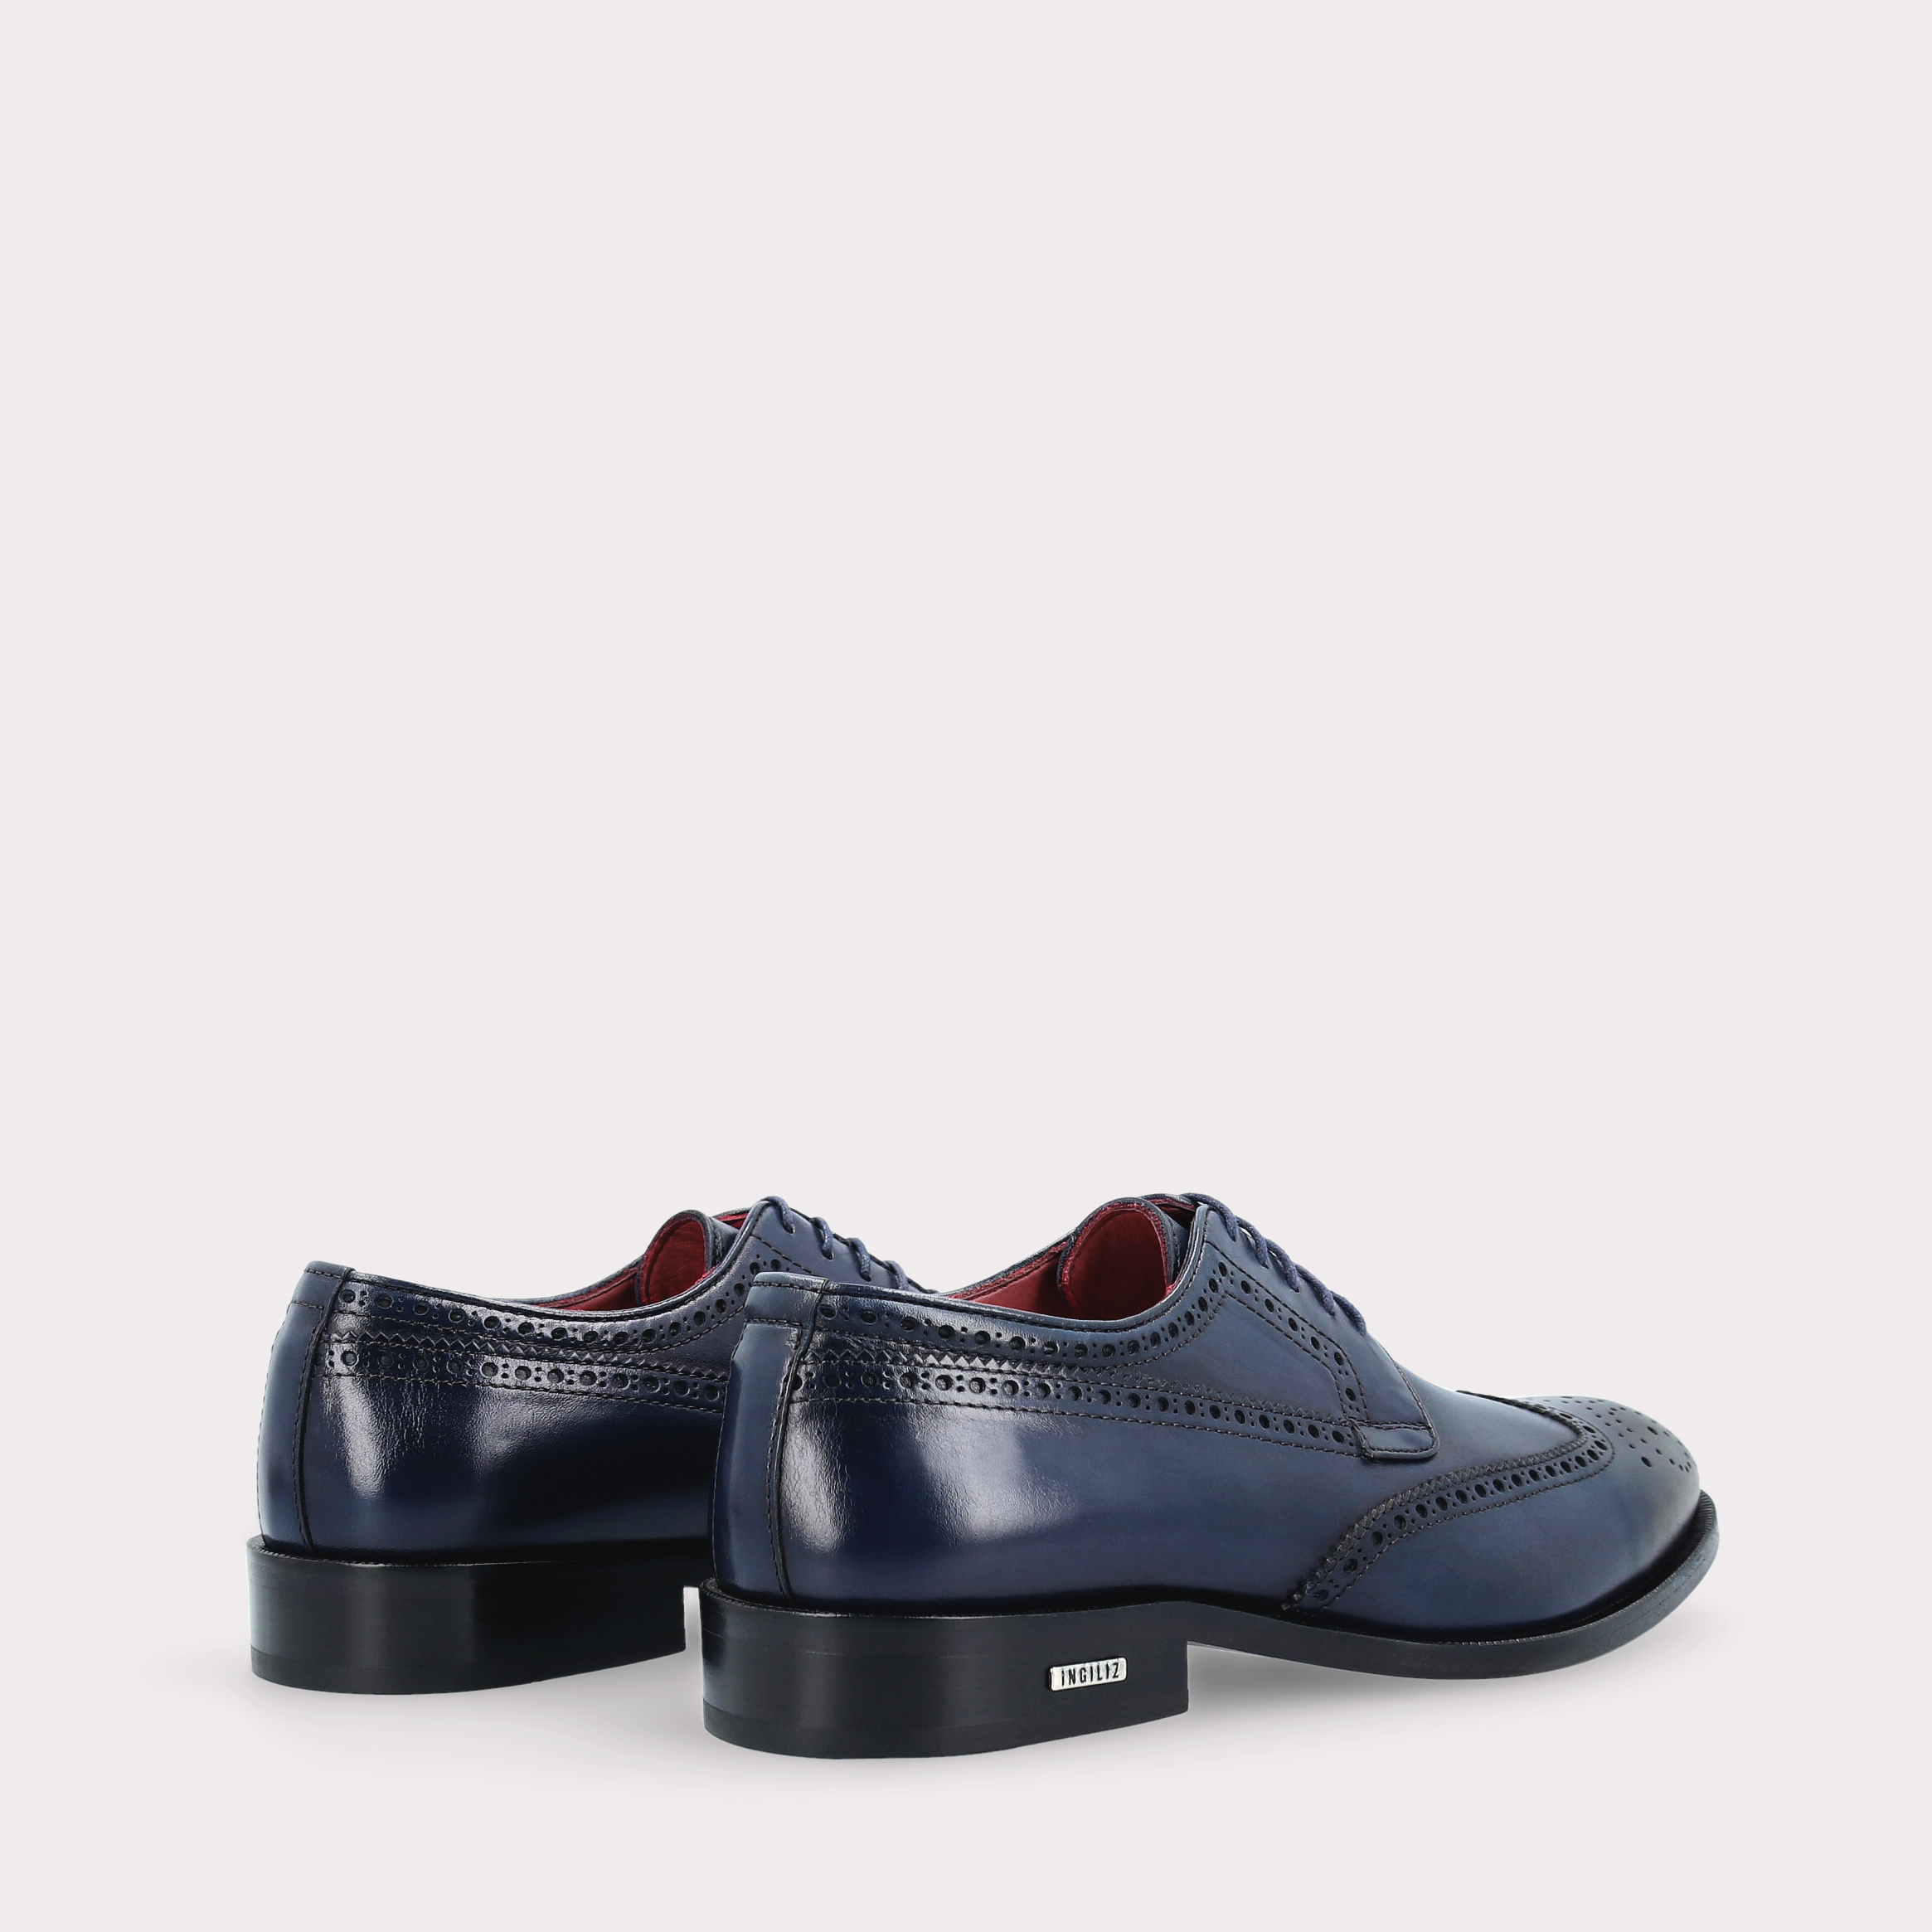 BERGAMO 01 dark blue leather derby shoes